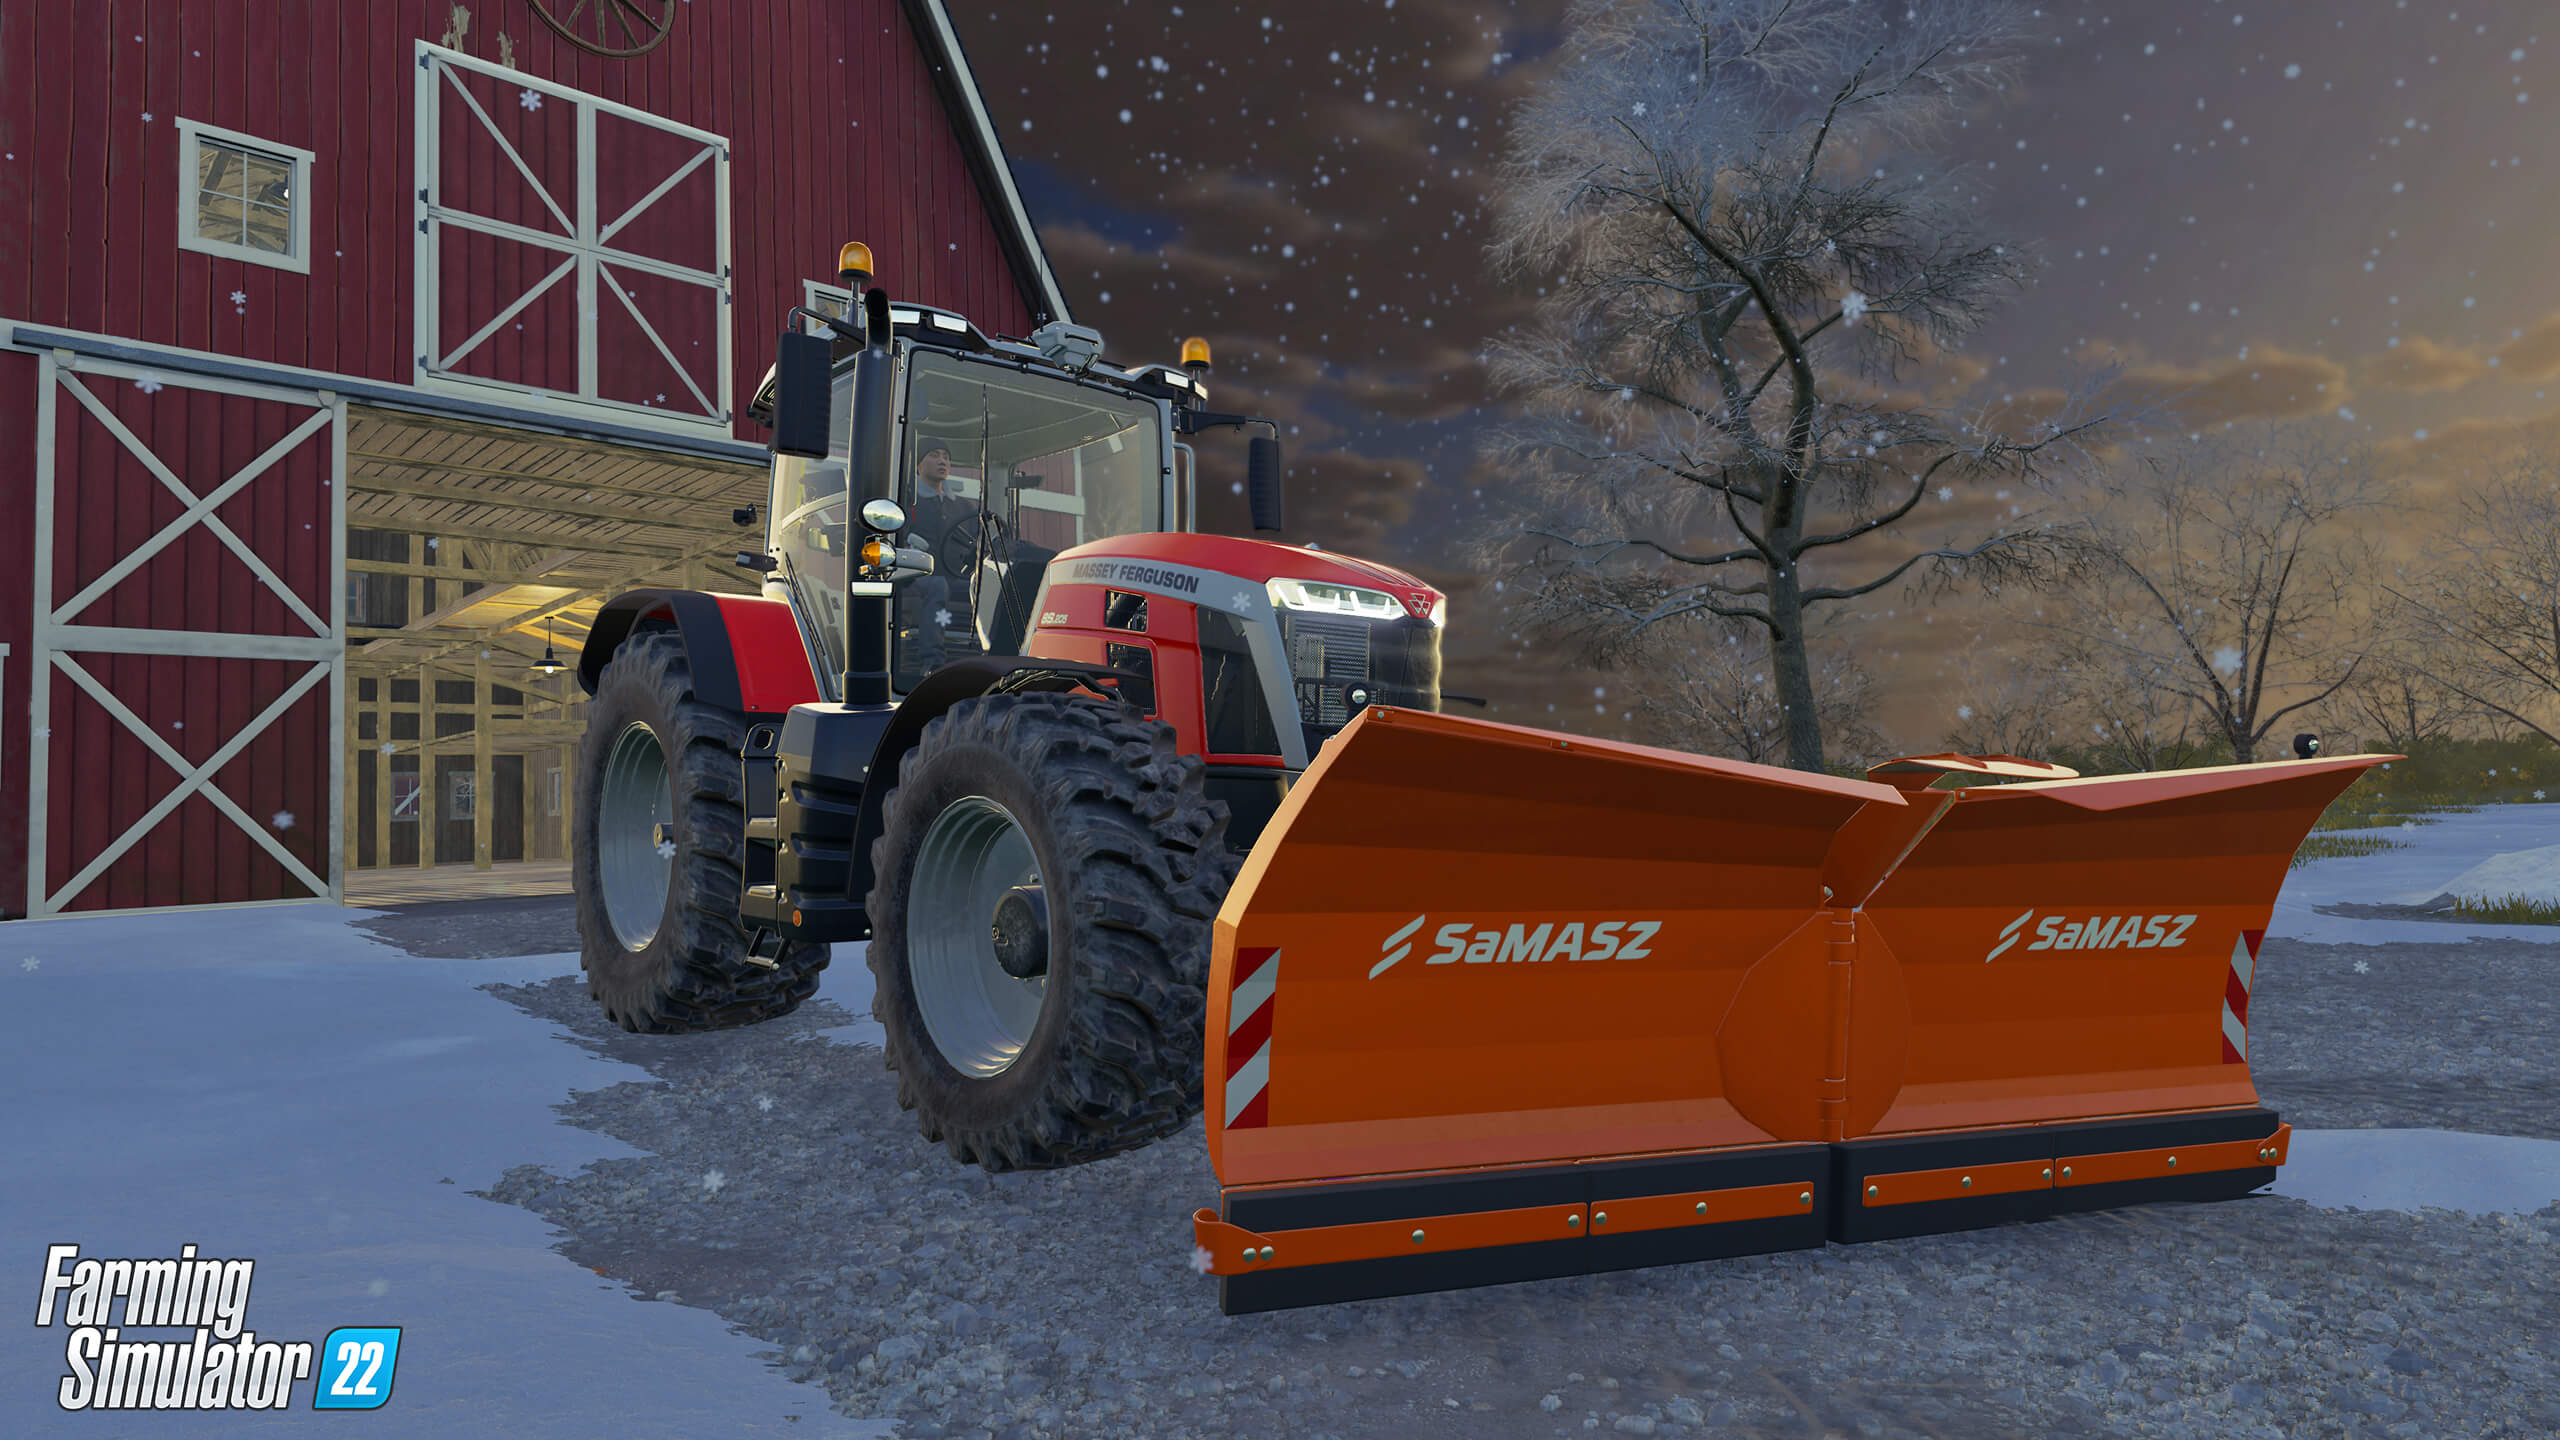 farming simulator 22 price ps4